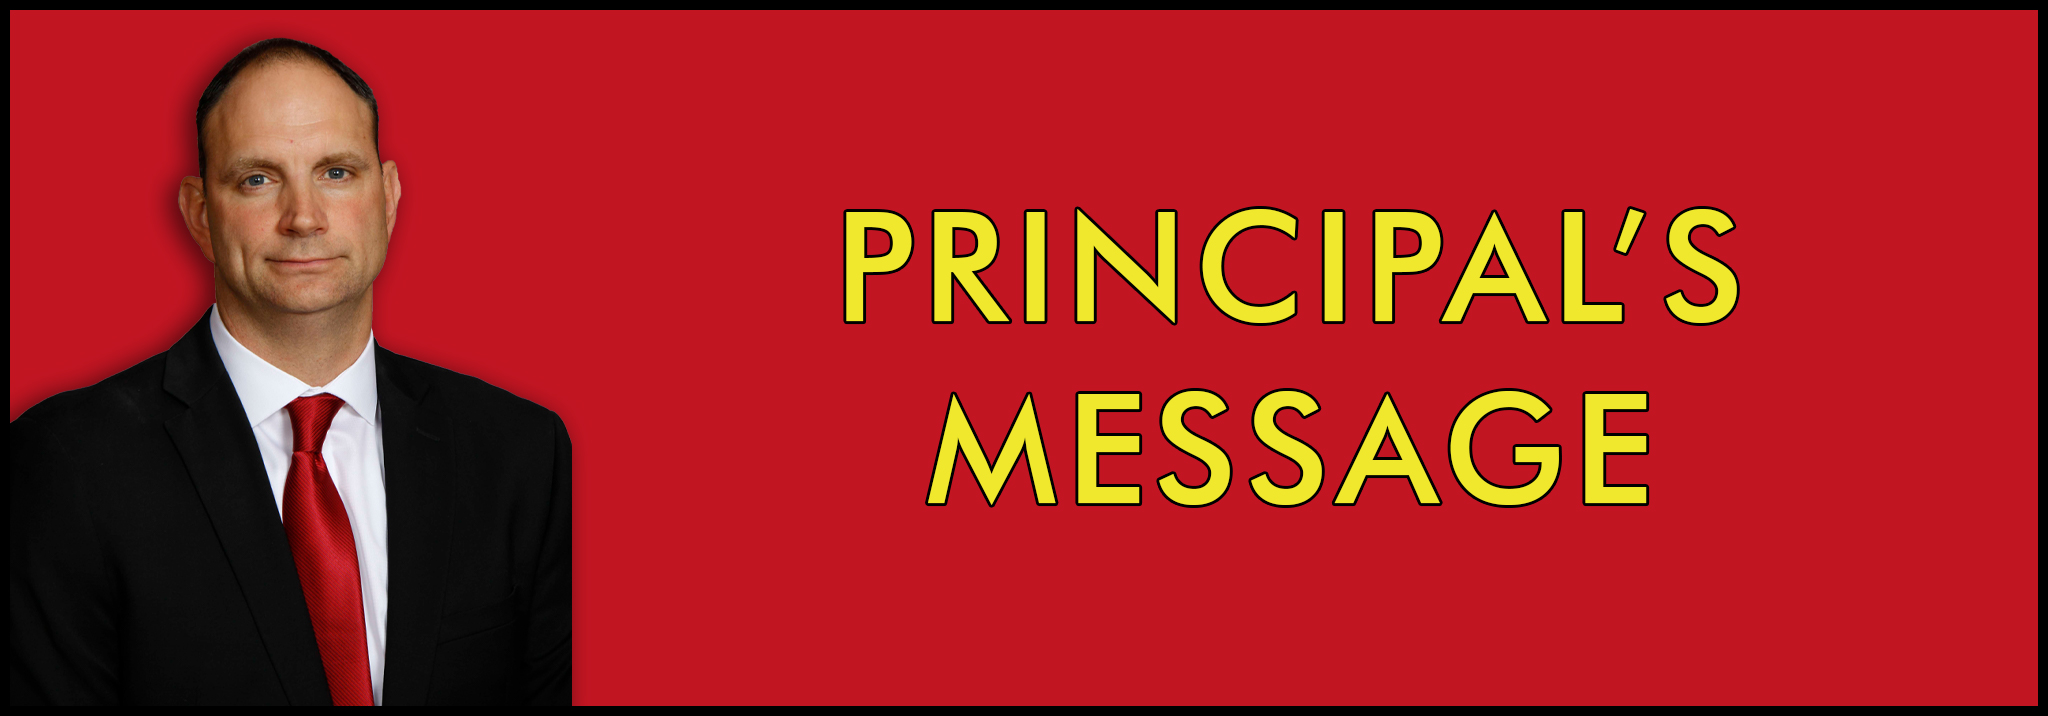 principal message image